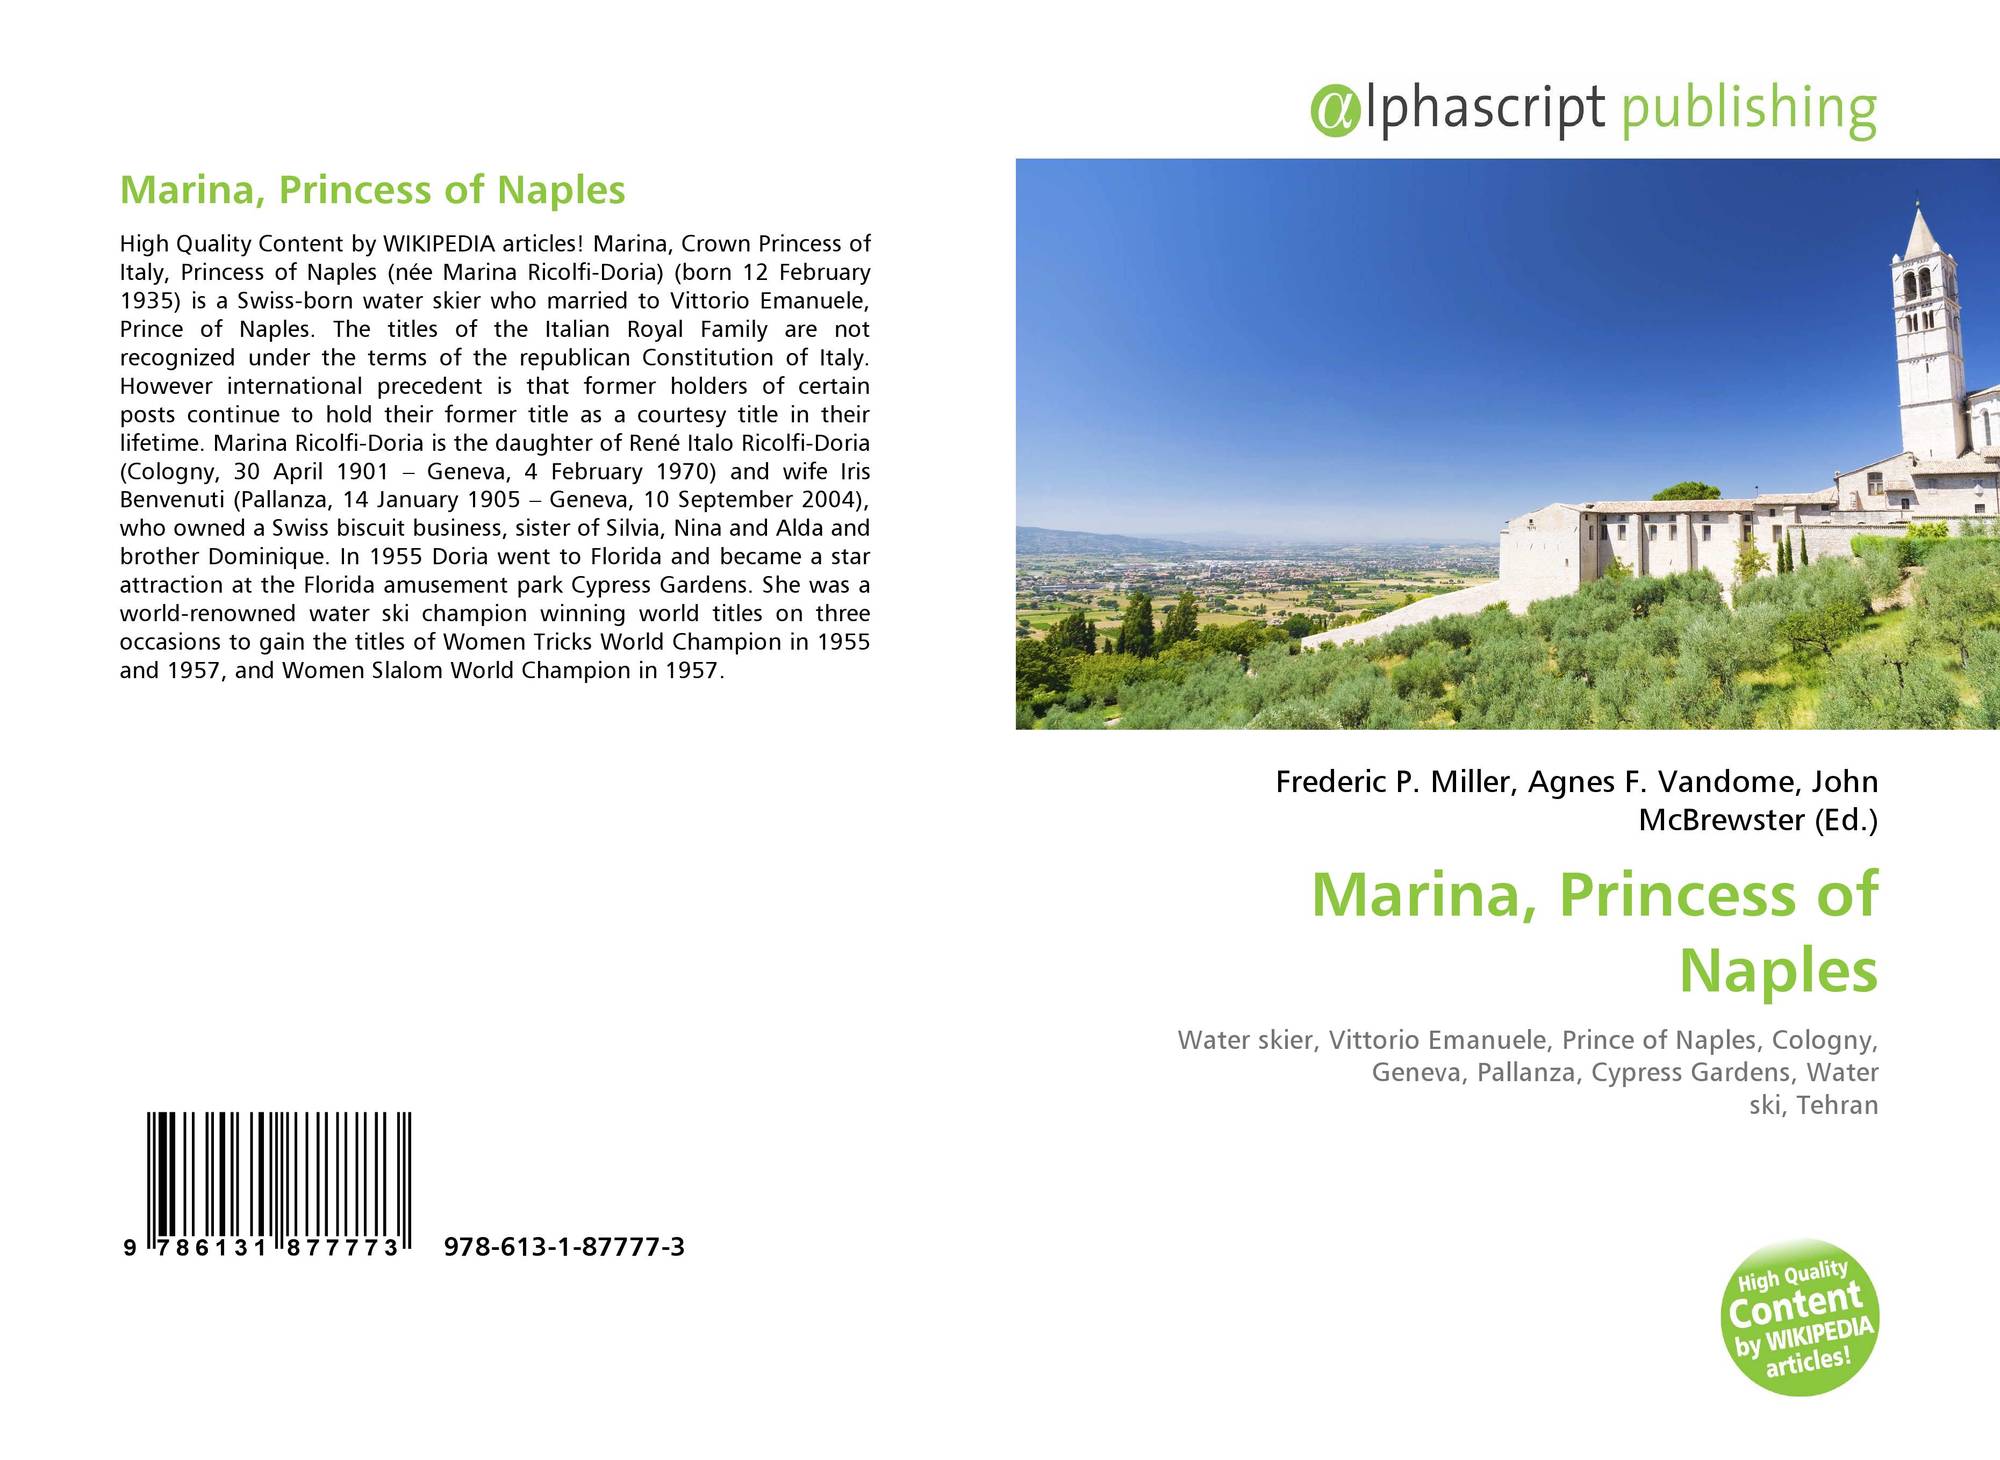 Marina Princess Of Naples 978 613 1 87777 3 6131877777